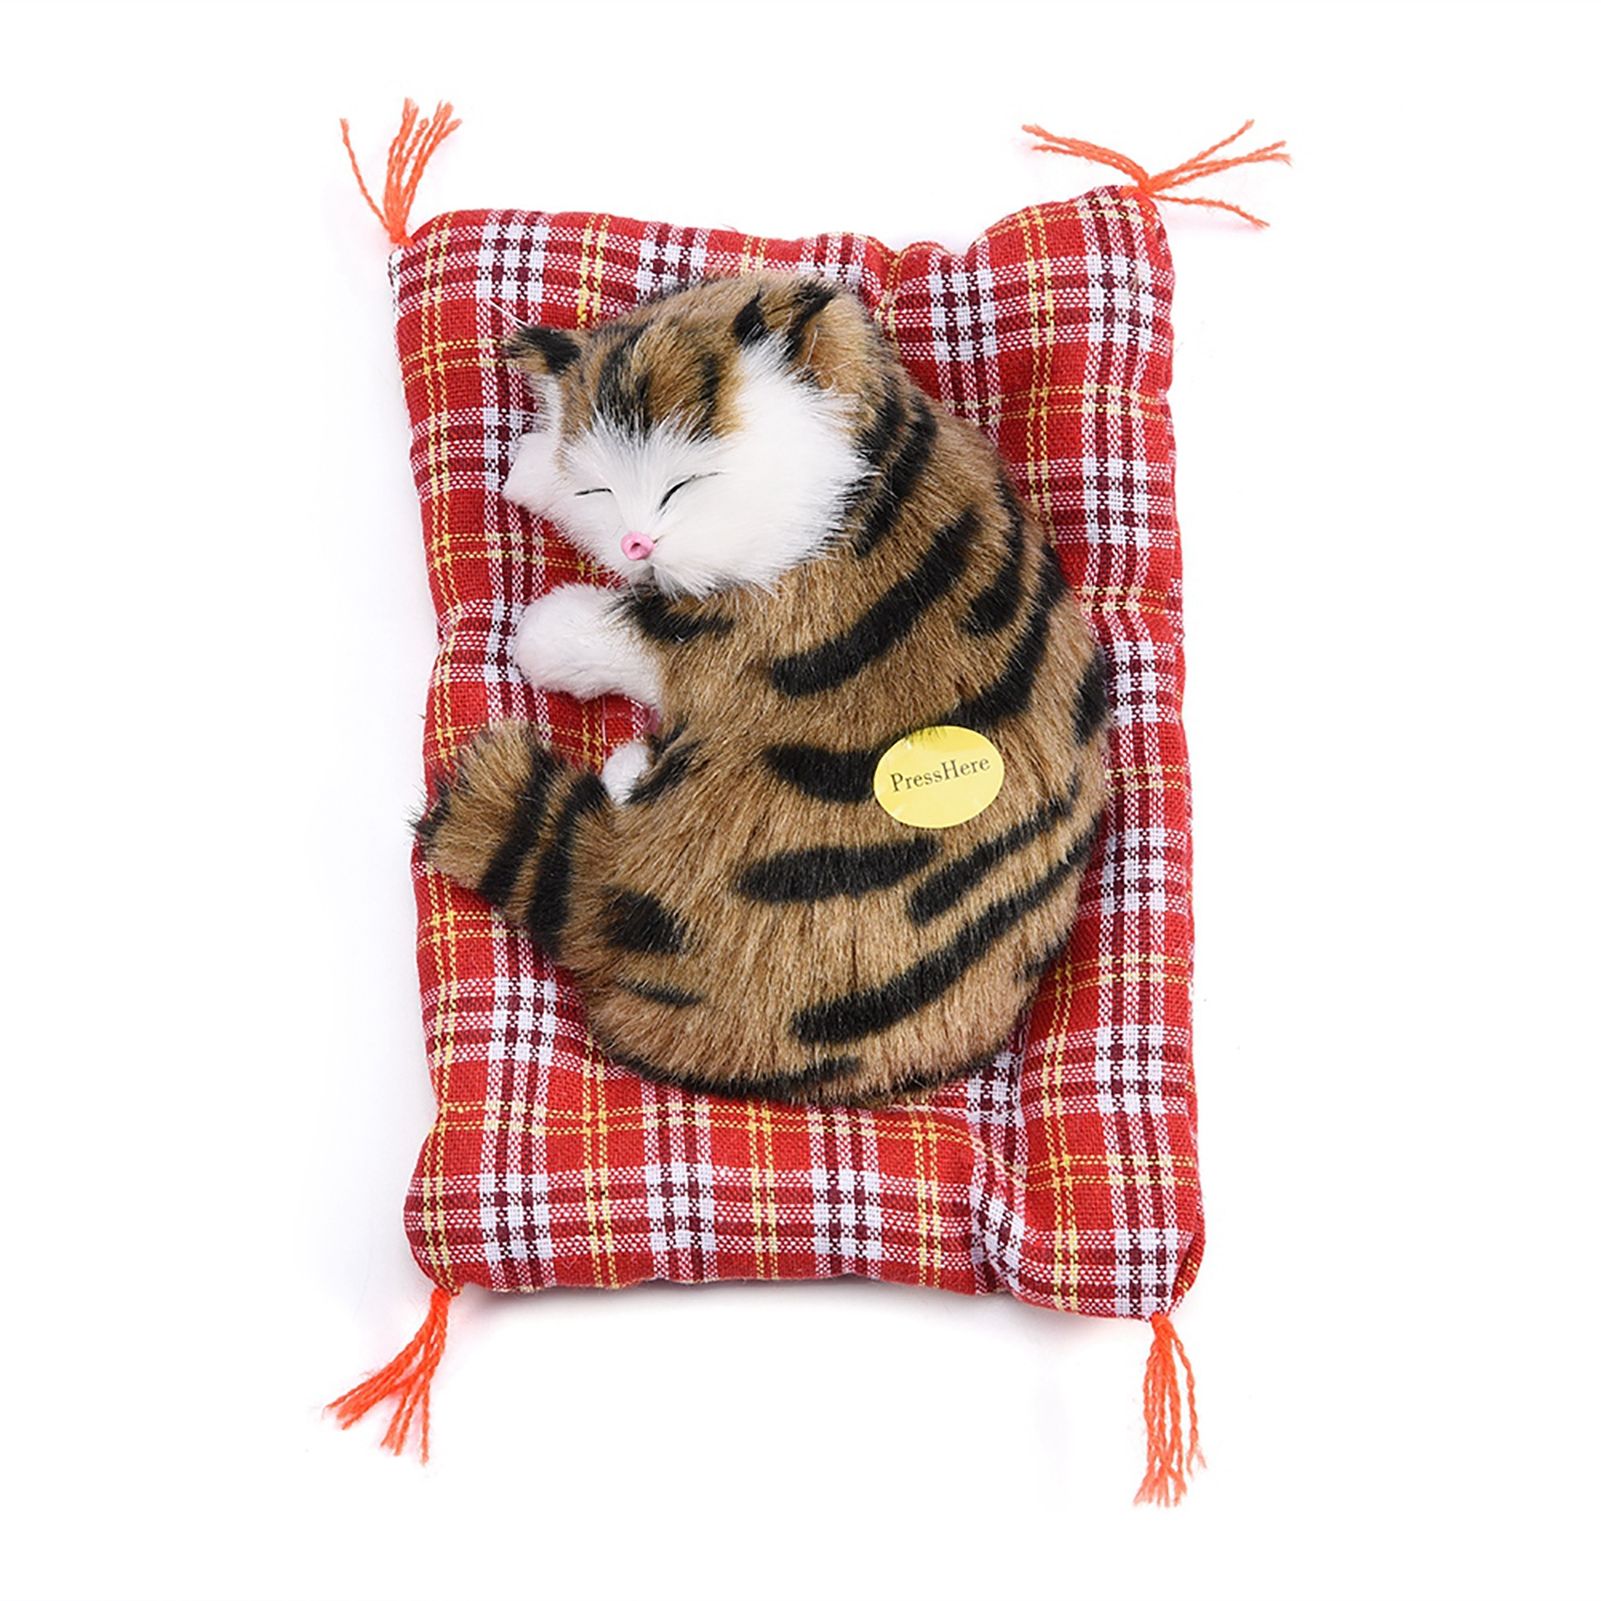 Cat nap игрушка. Cat nap Plush. Cat nap Plush game. Cat nap игрушка купить